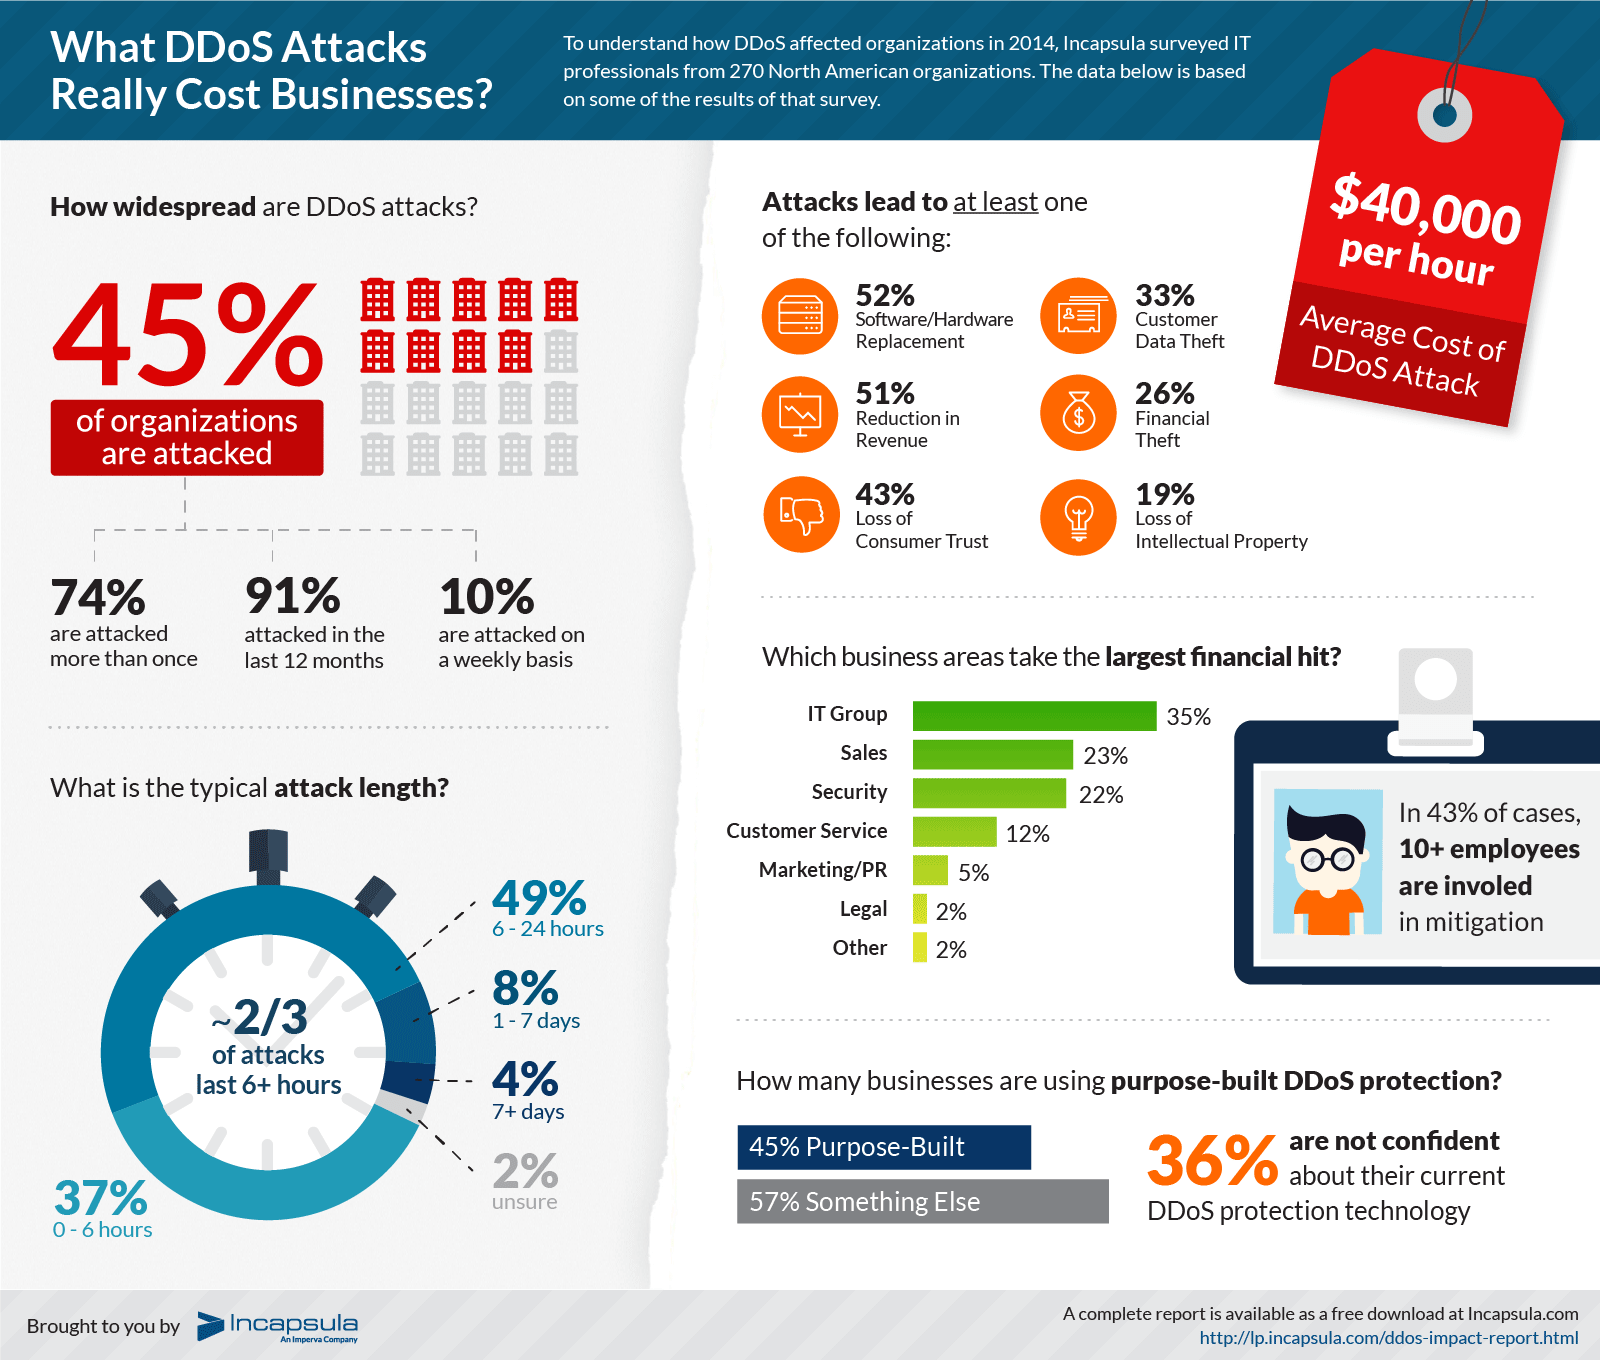 ddos-impact-survey-infographic-hires